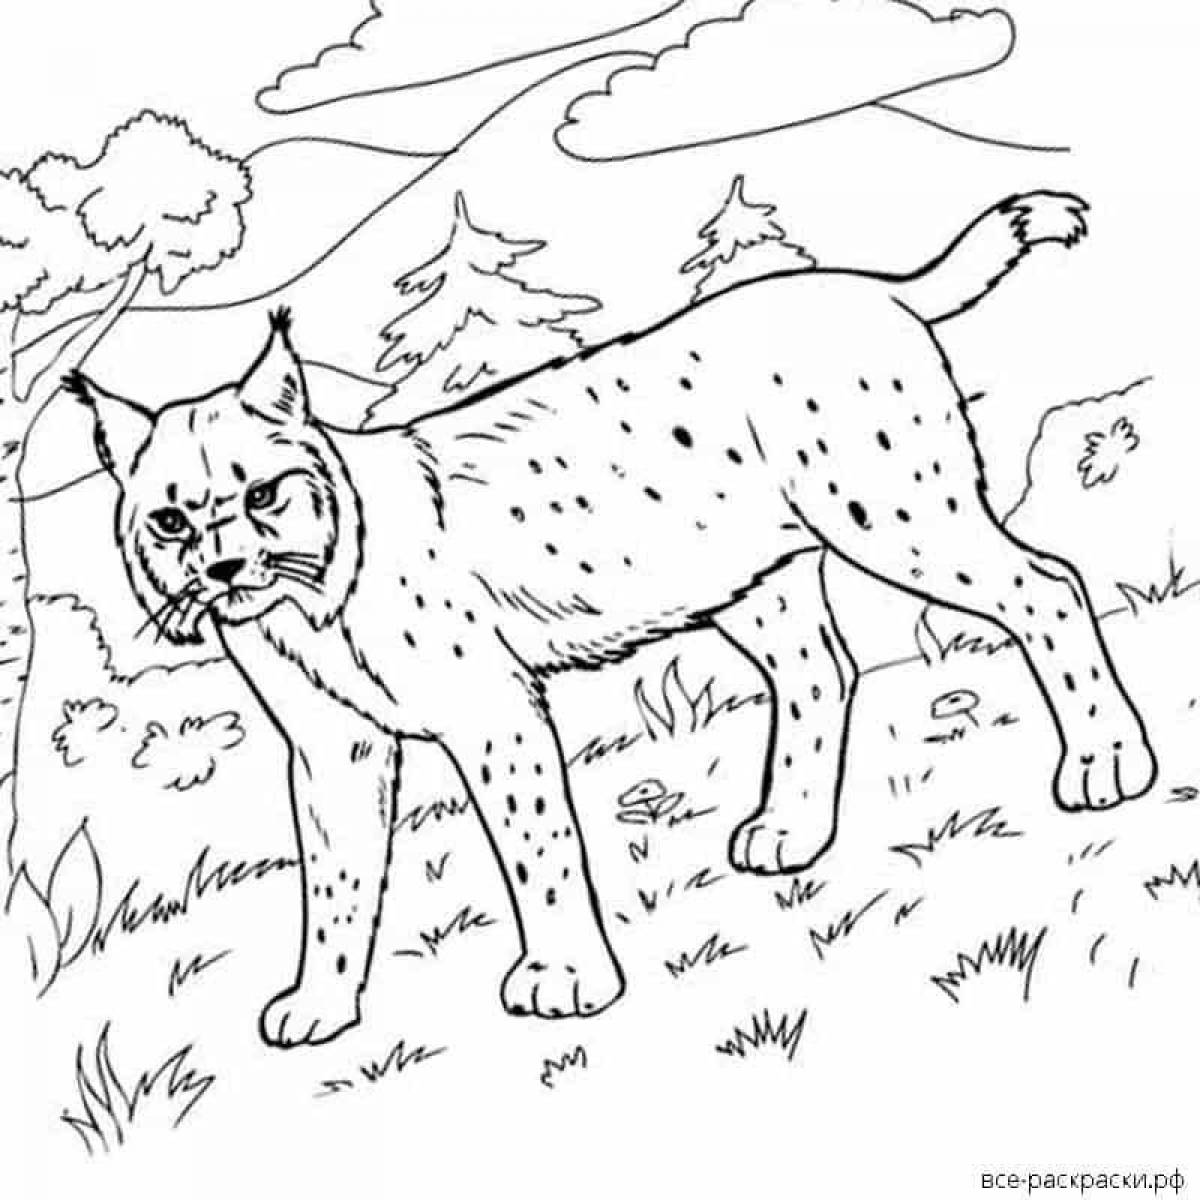 Lynx fun coloring book for teens